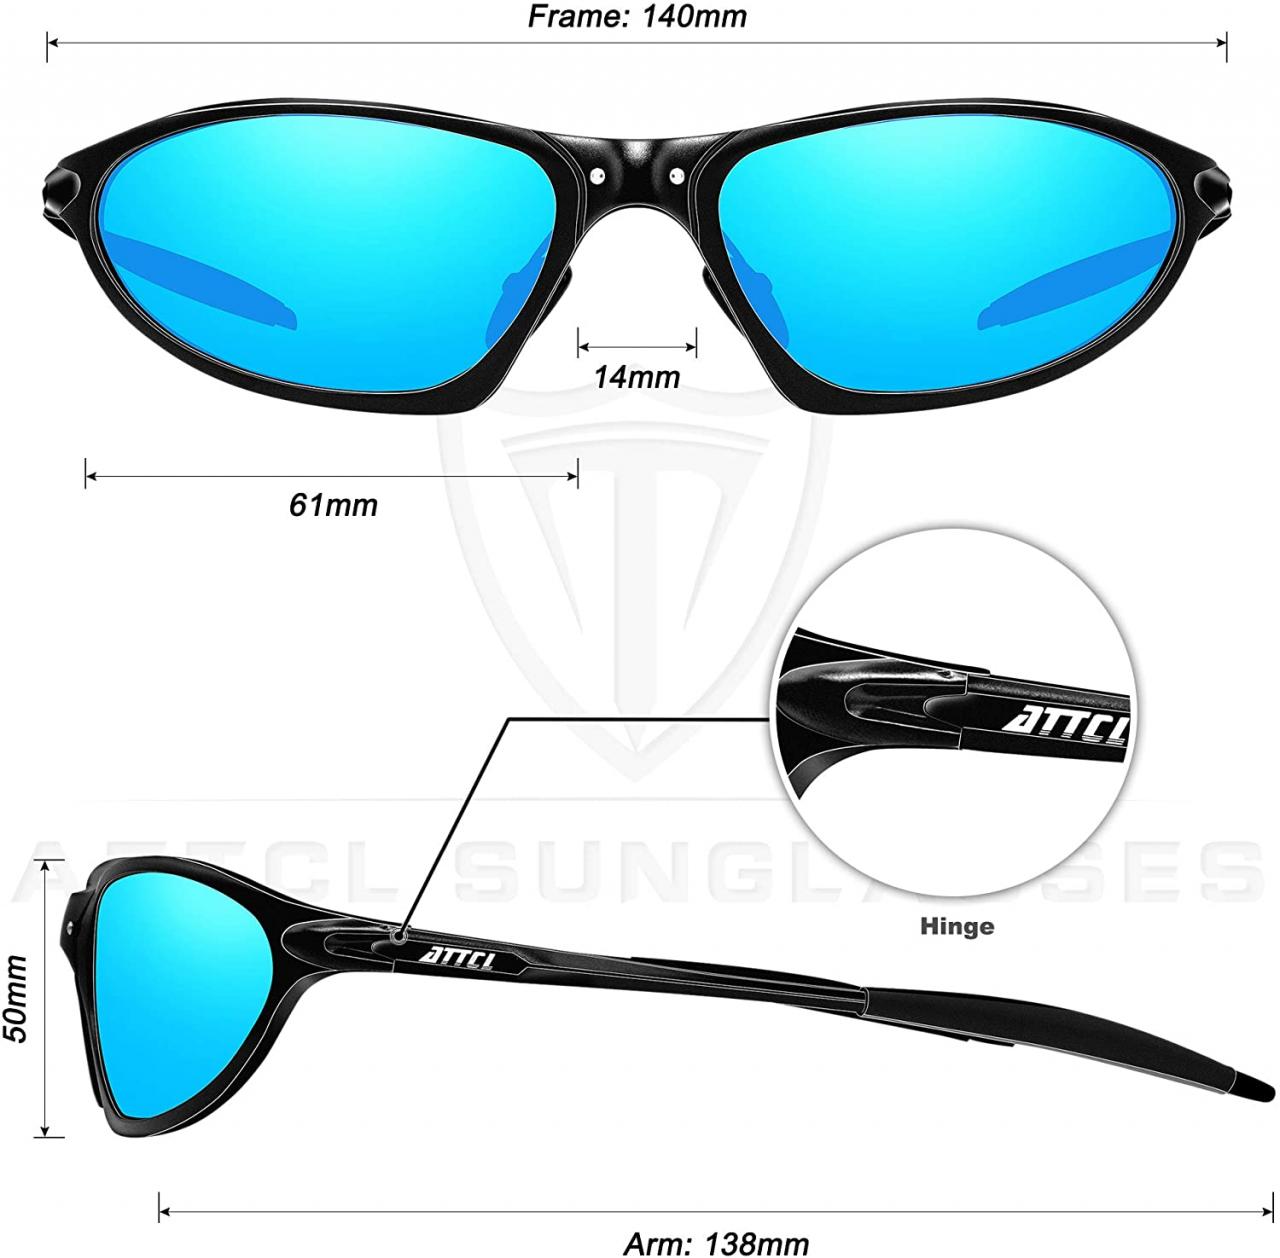 Buy ATTCL Men's Driving Polarized Sunglasses For Men - Al-Mg Metal Frame  Ultra Light Online in Hong Kong. B07M9T96B5